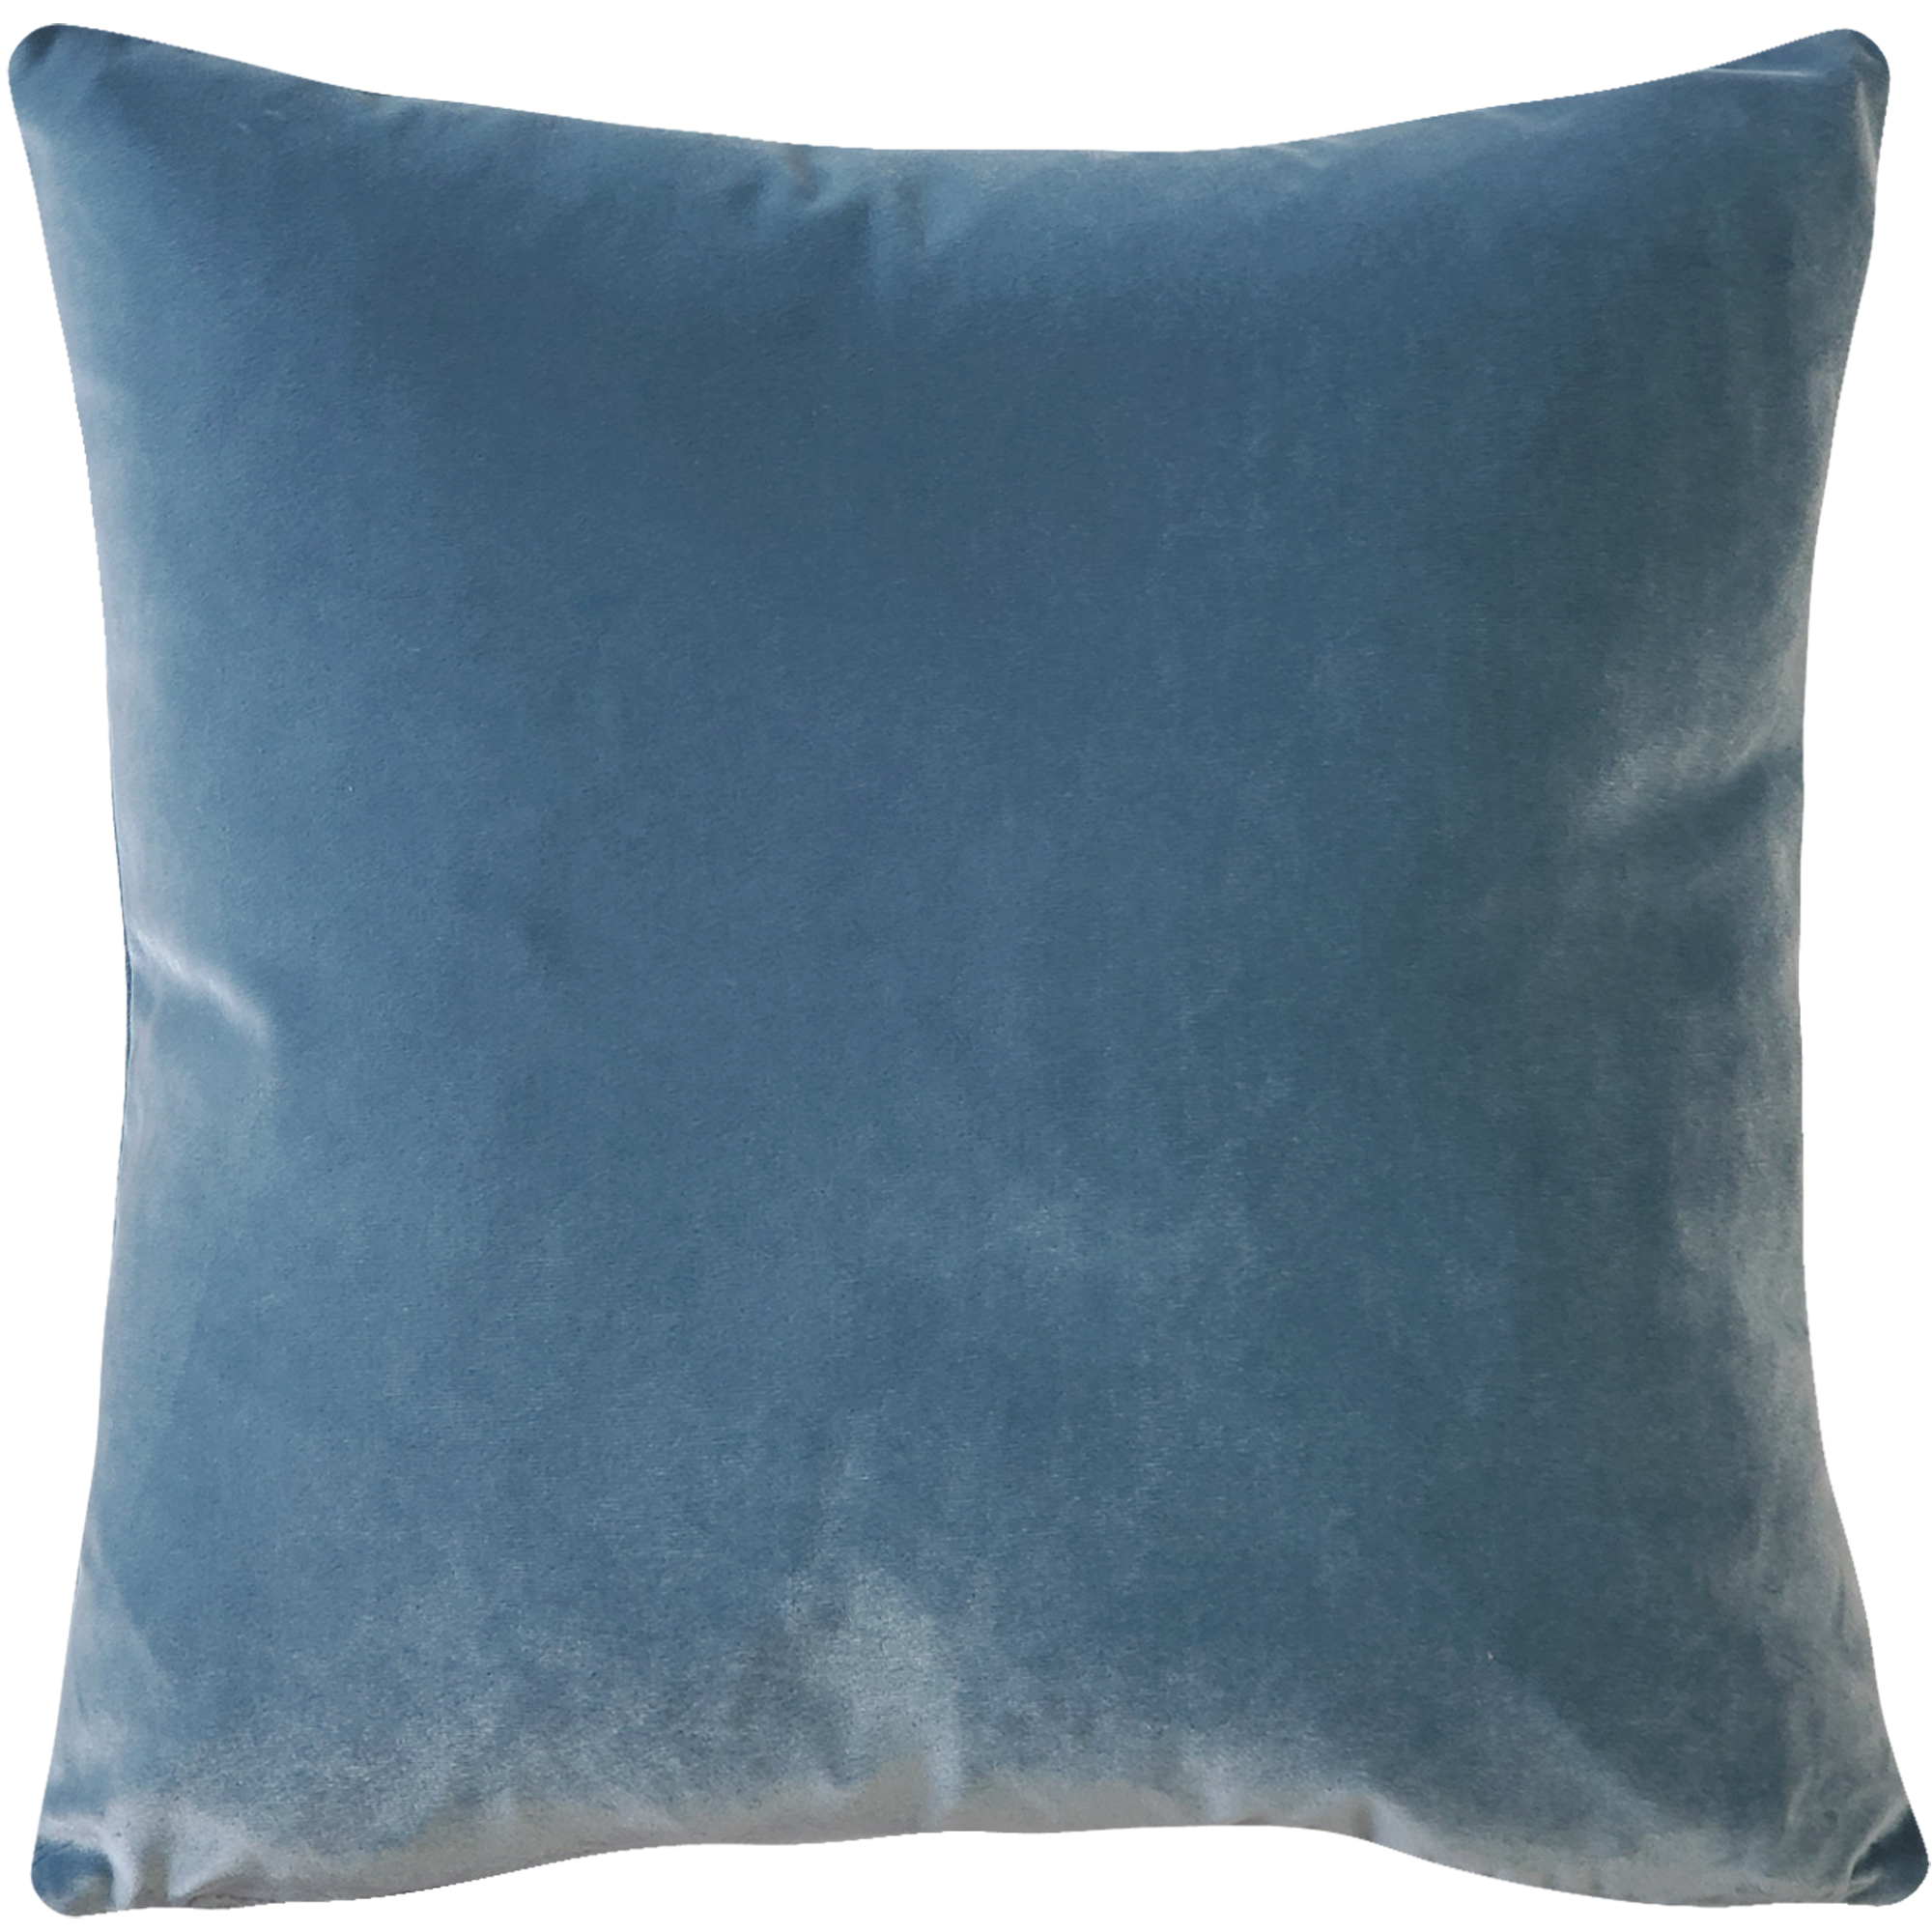 Castello Provincial Blue Velvet Throw Pillow 17x17